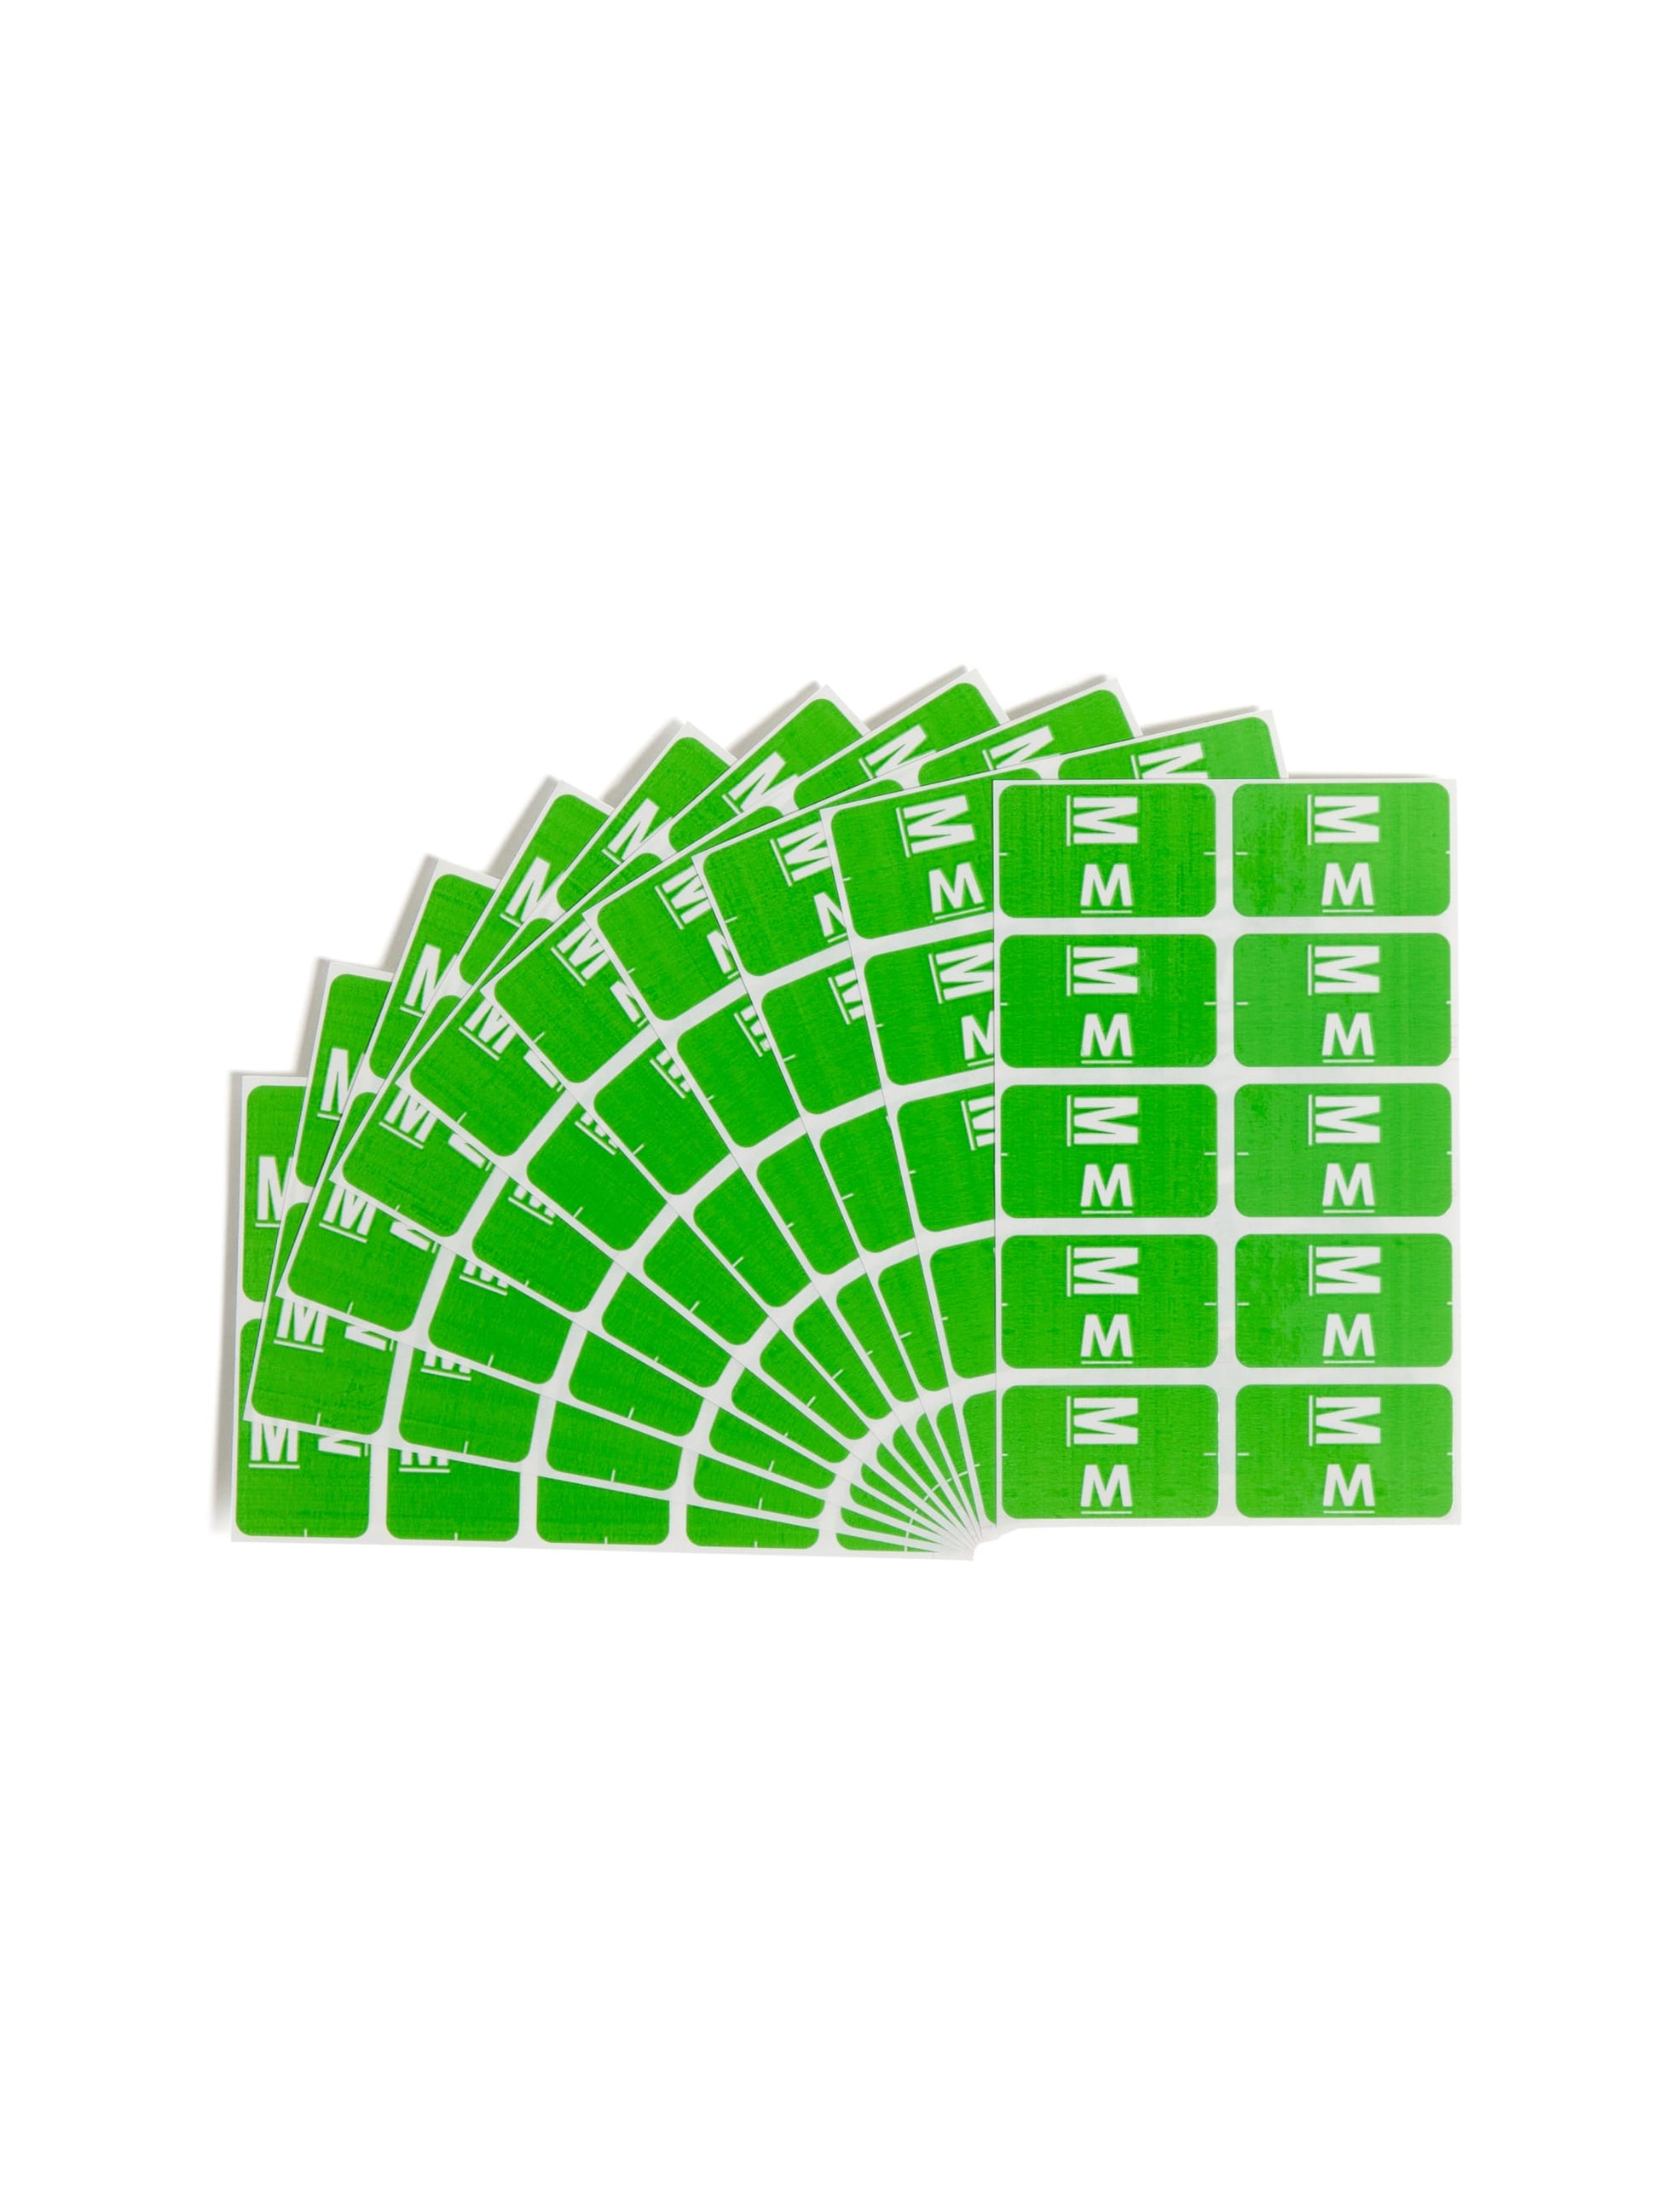 AlphaZ® ACCS Color Coded Alphabetic Labels - Sheets, Light Green Color, 1" X 1-5/8" Size, Set of 1, 086486671835